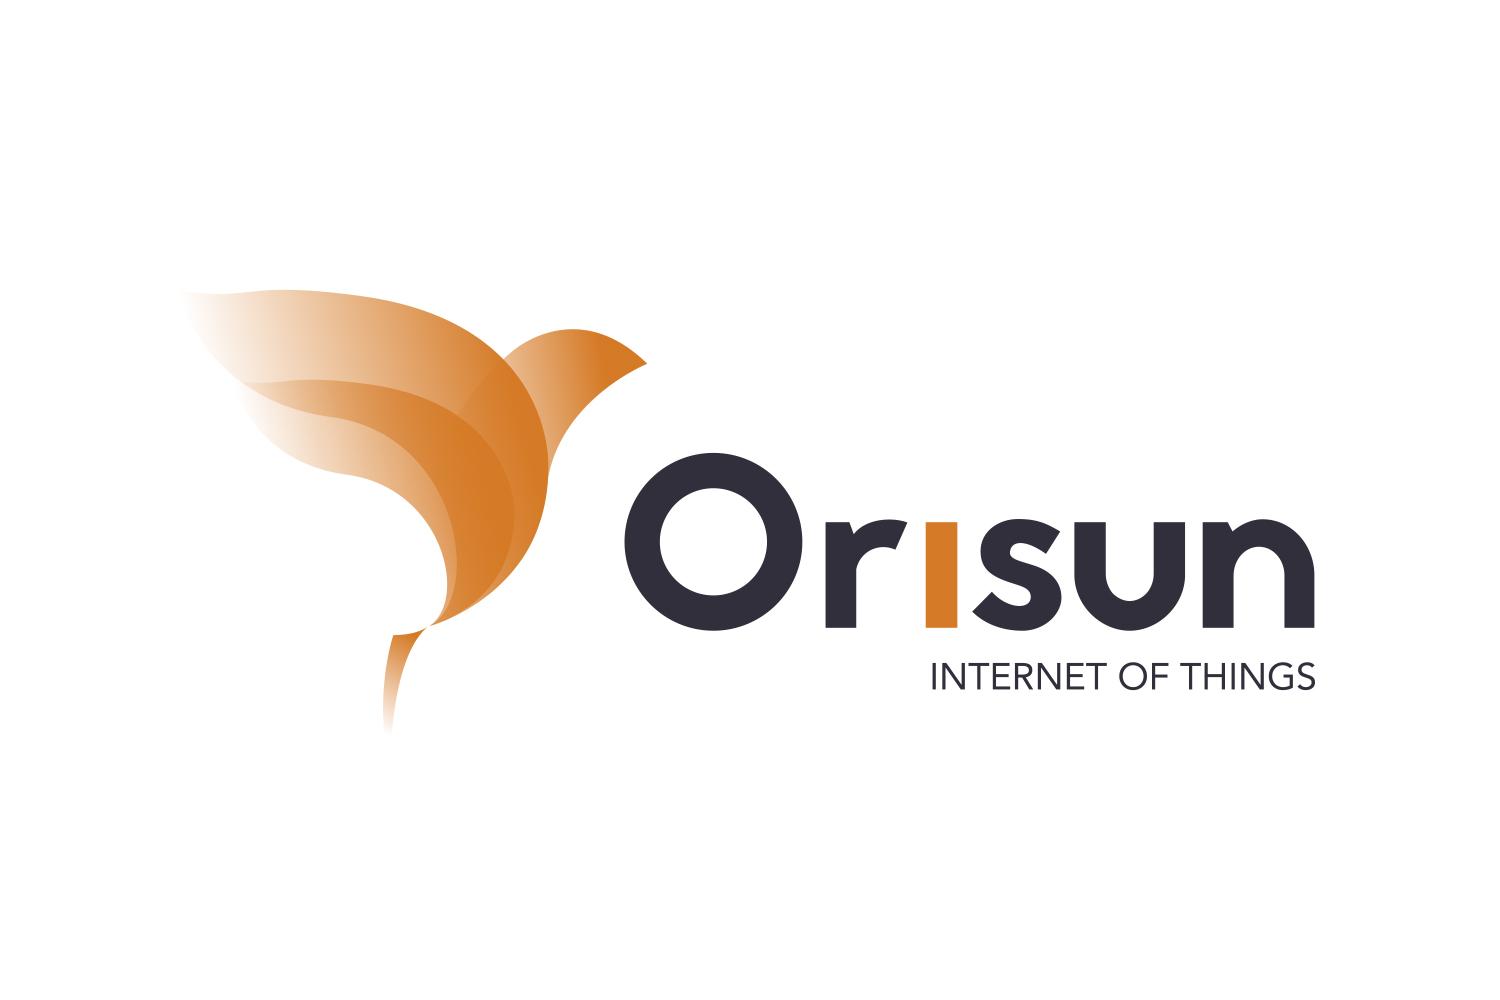 ORISUN, internet of things